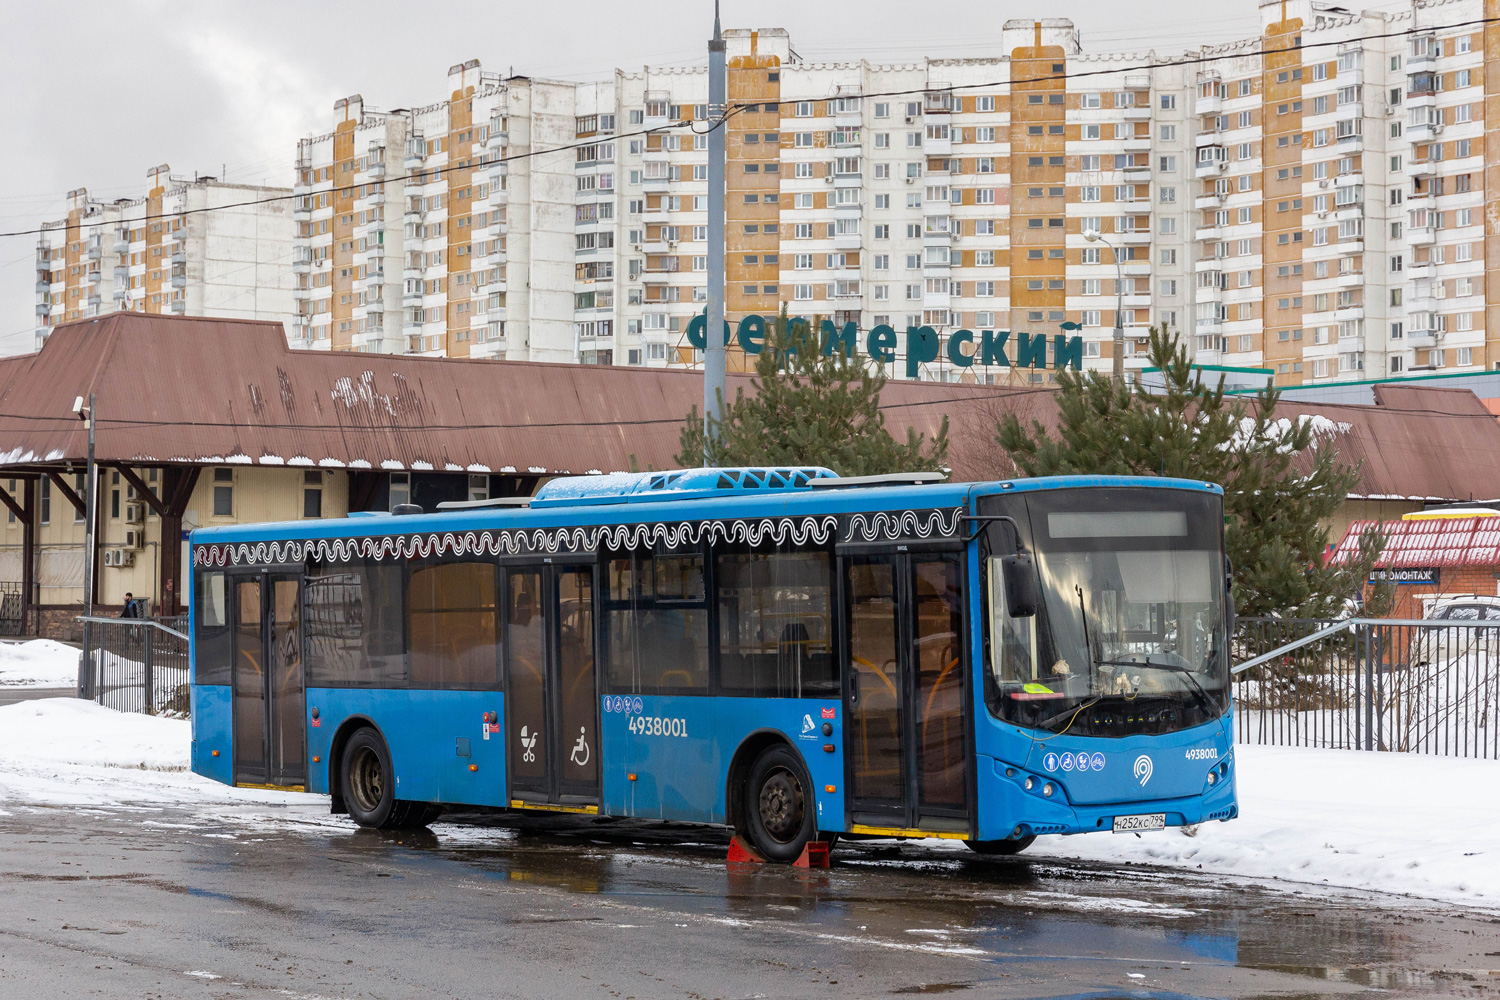 Масква, Volgabus-5270.02 № 4938001